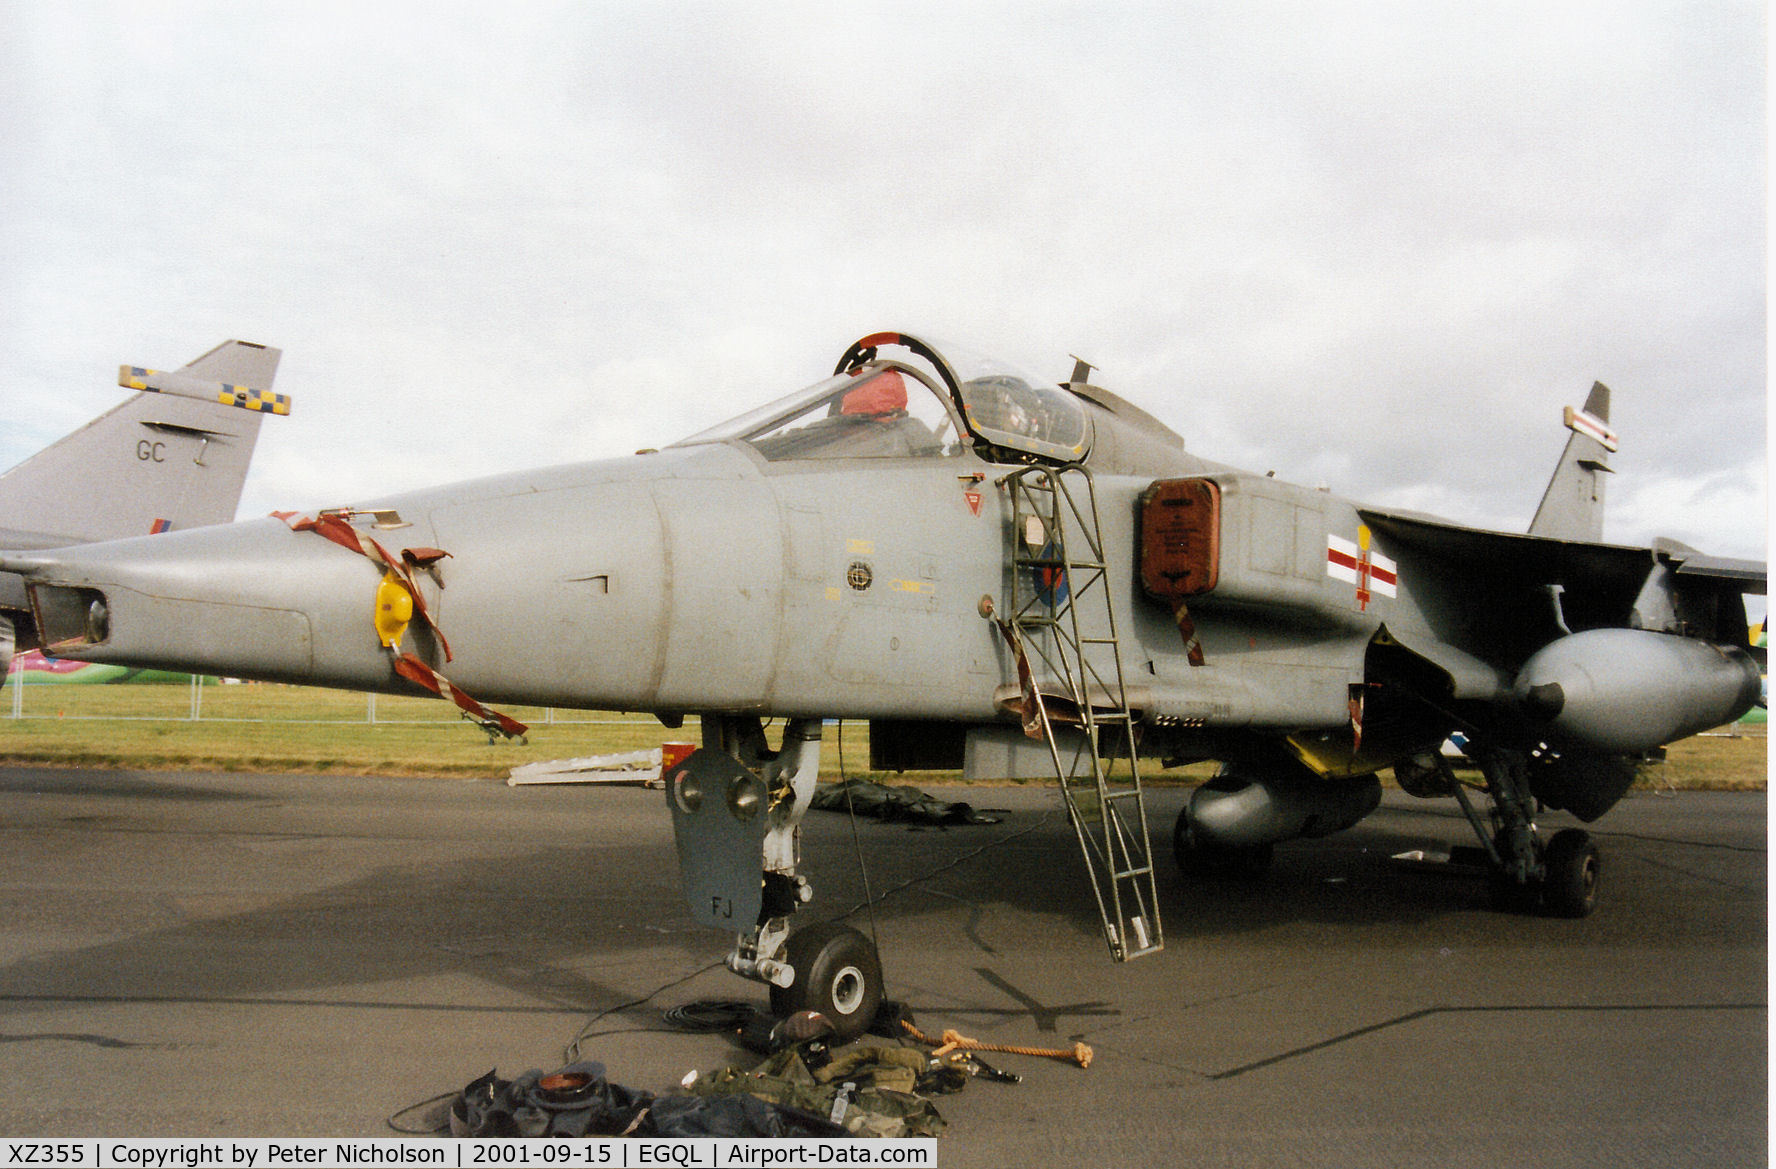 XZ355, 1976 Sepecat Jaguar GR.3A C/N S.122, Jaguar GR.3A, callsign Rebel 1, of 41 Squadron on display at the 2001 RAF Leuchars Airshow.